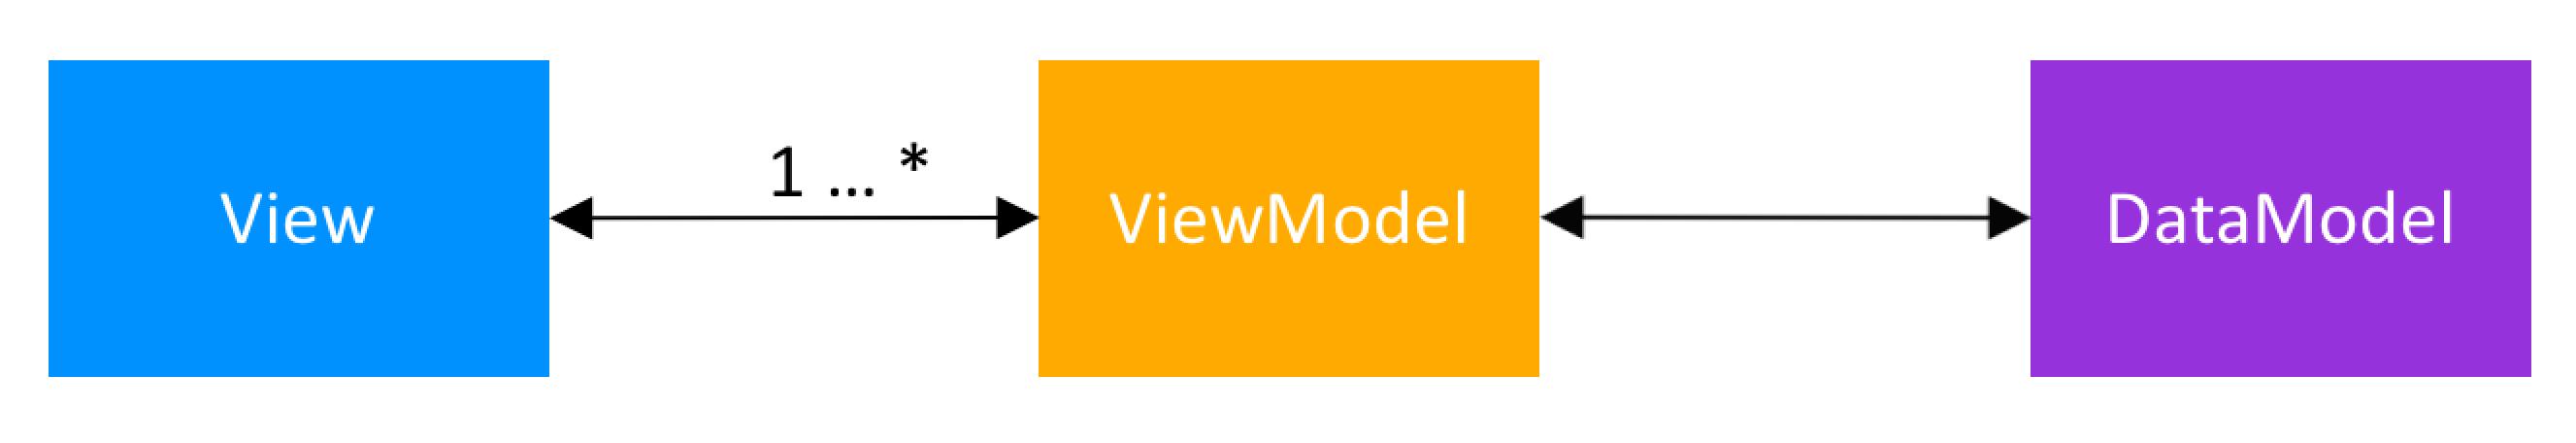 Model-View-ViewModel Architecture